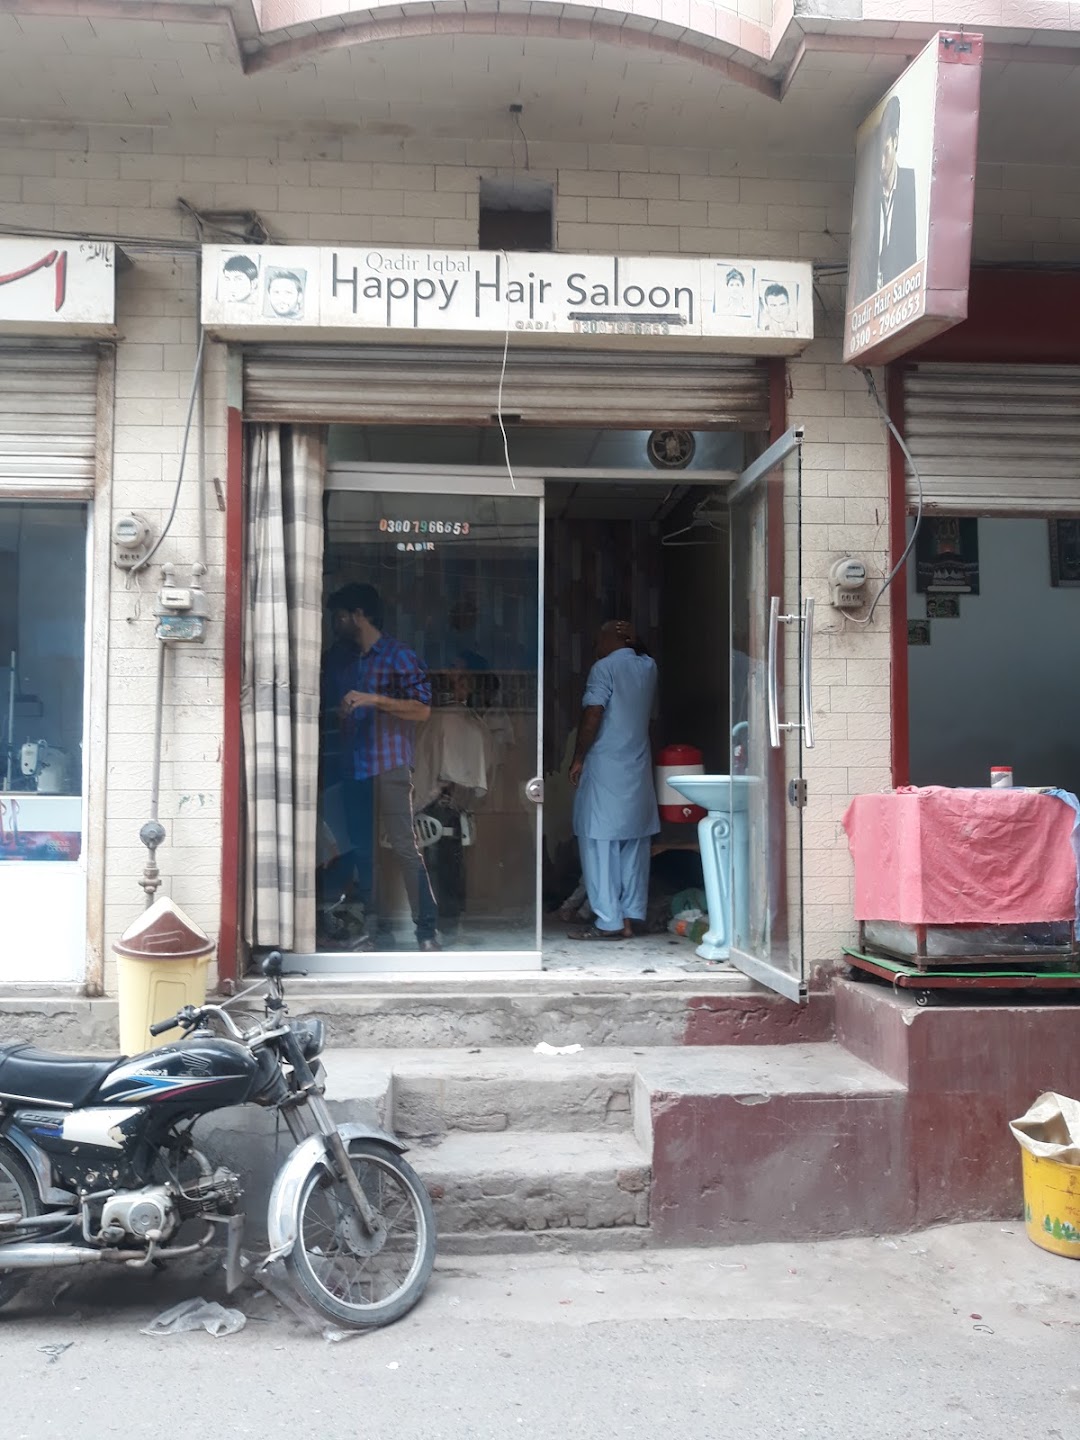 Qadir Bhai Hair Salon